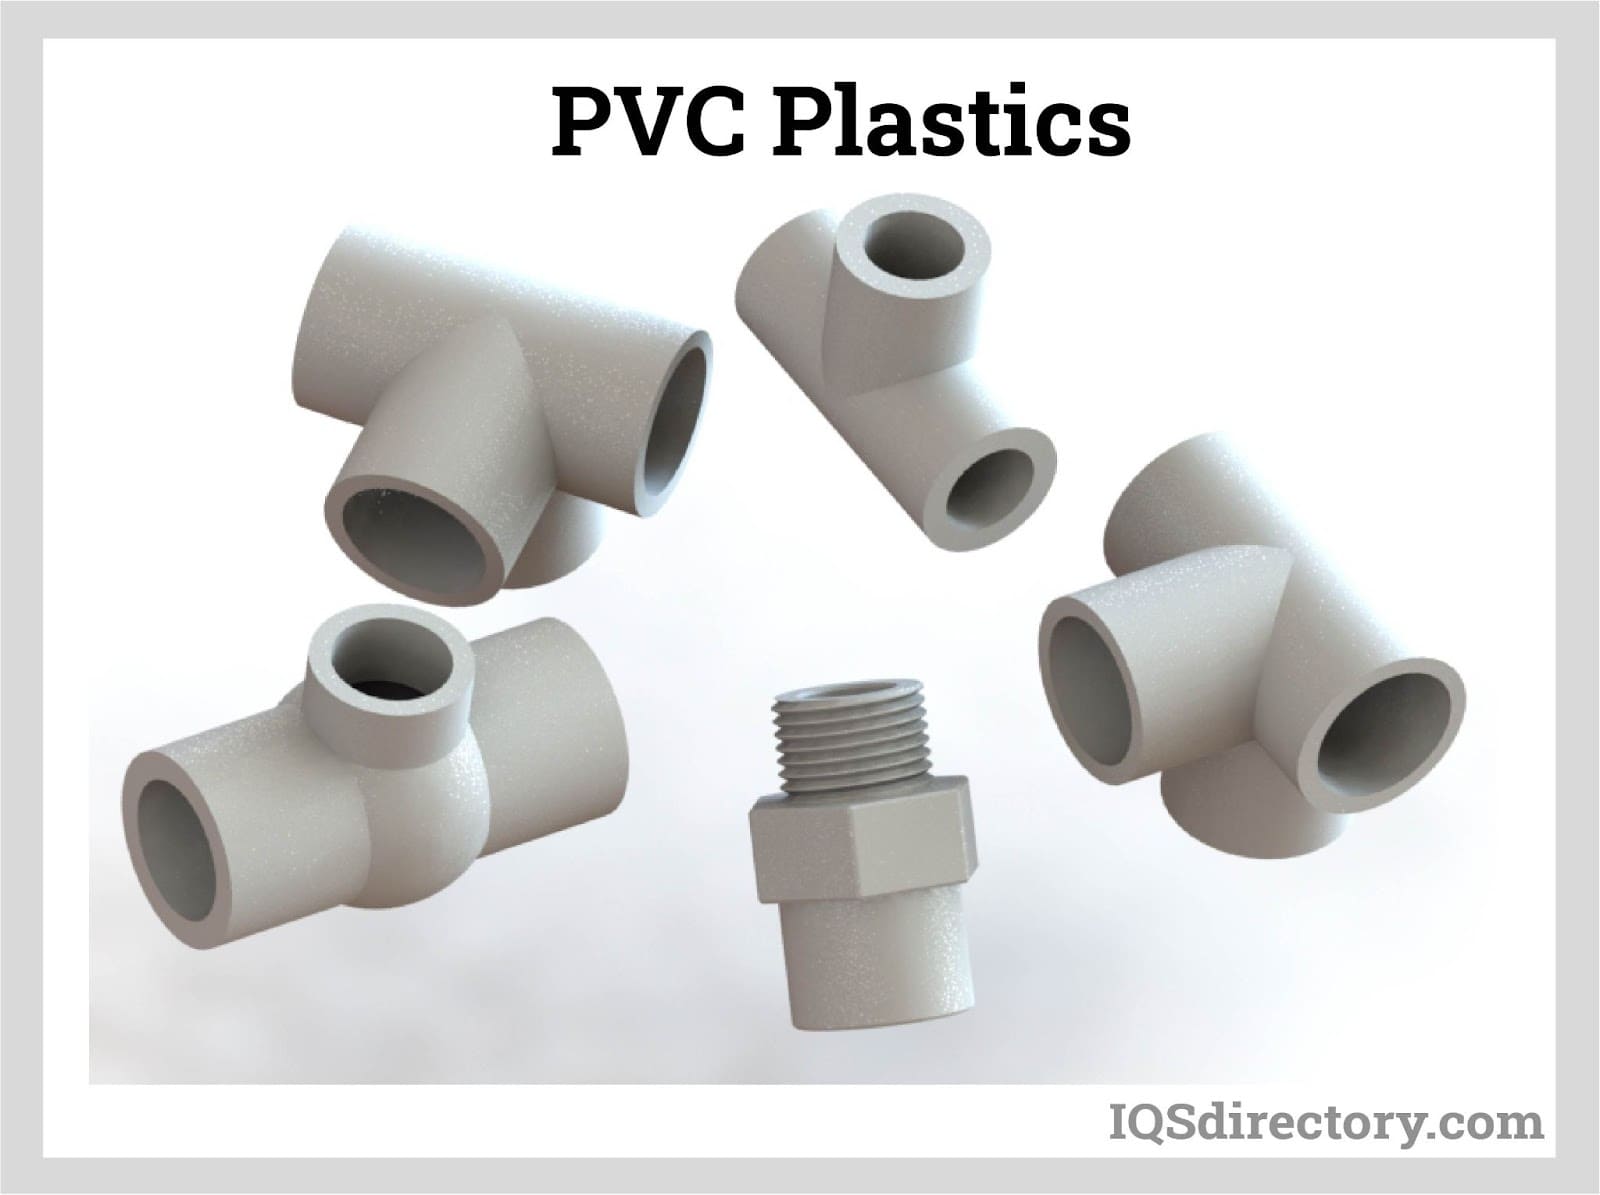 PVC Plastics